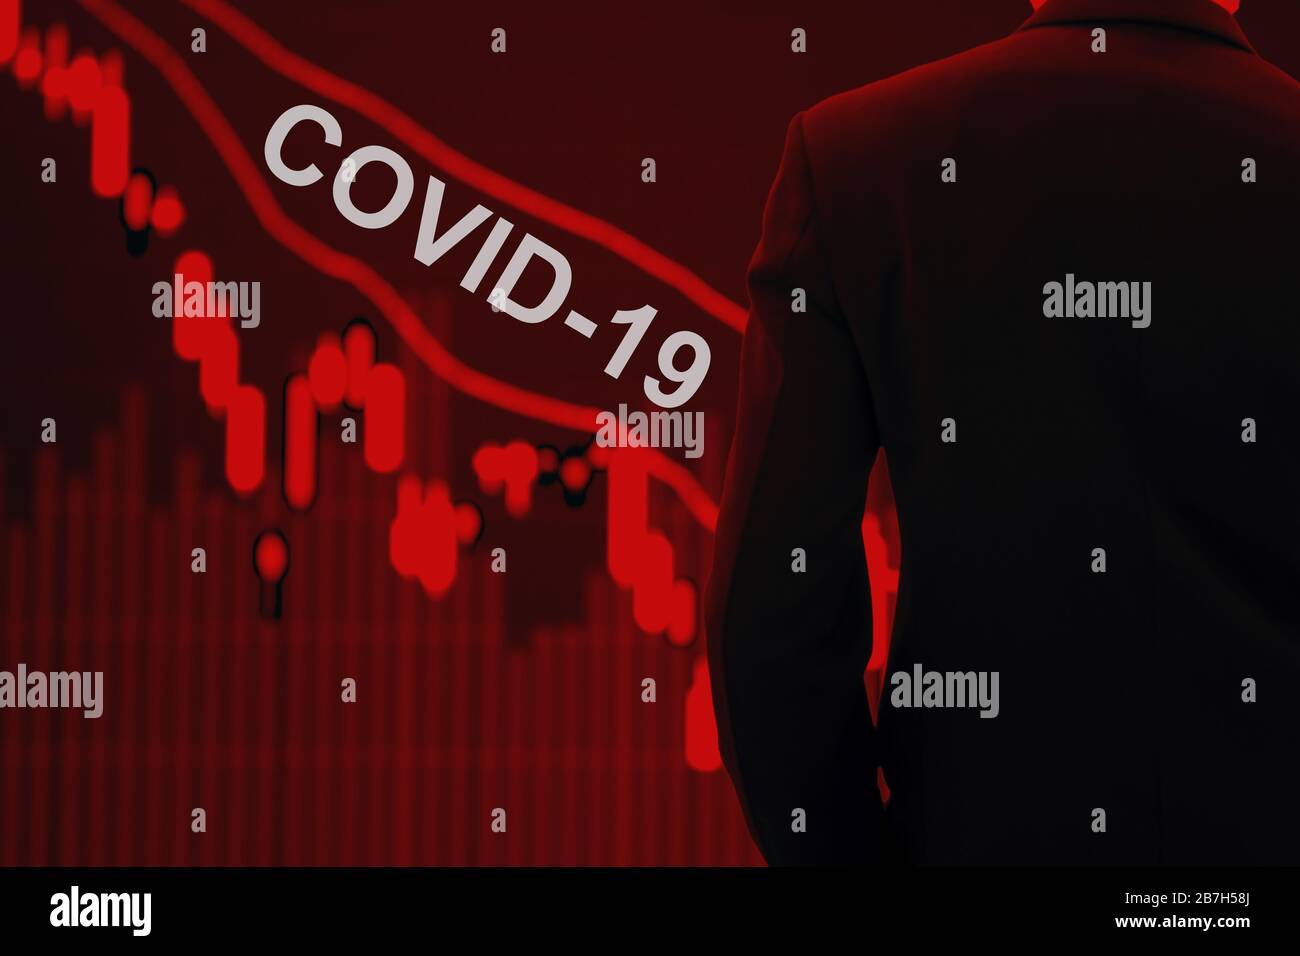 Covid-19 virus making world economy in serious crisis. Stock Photo